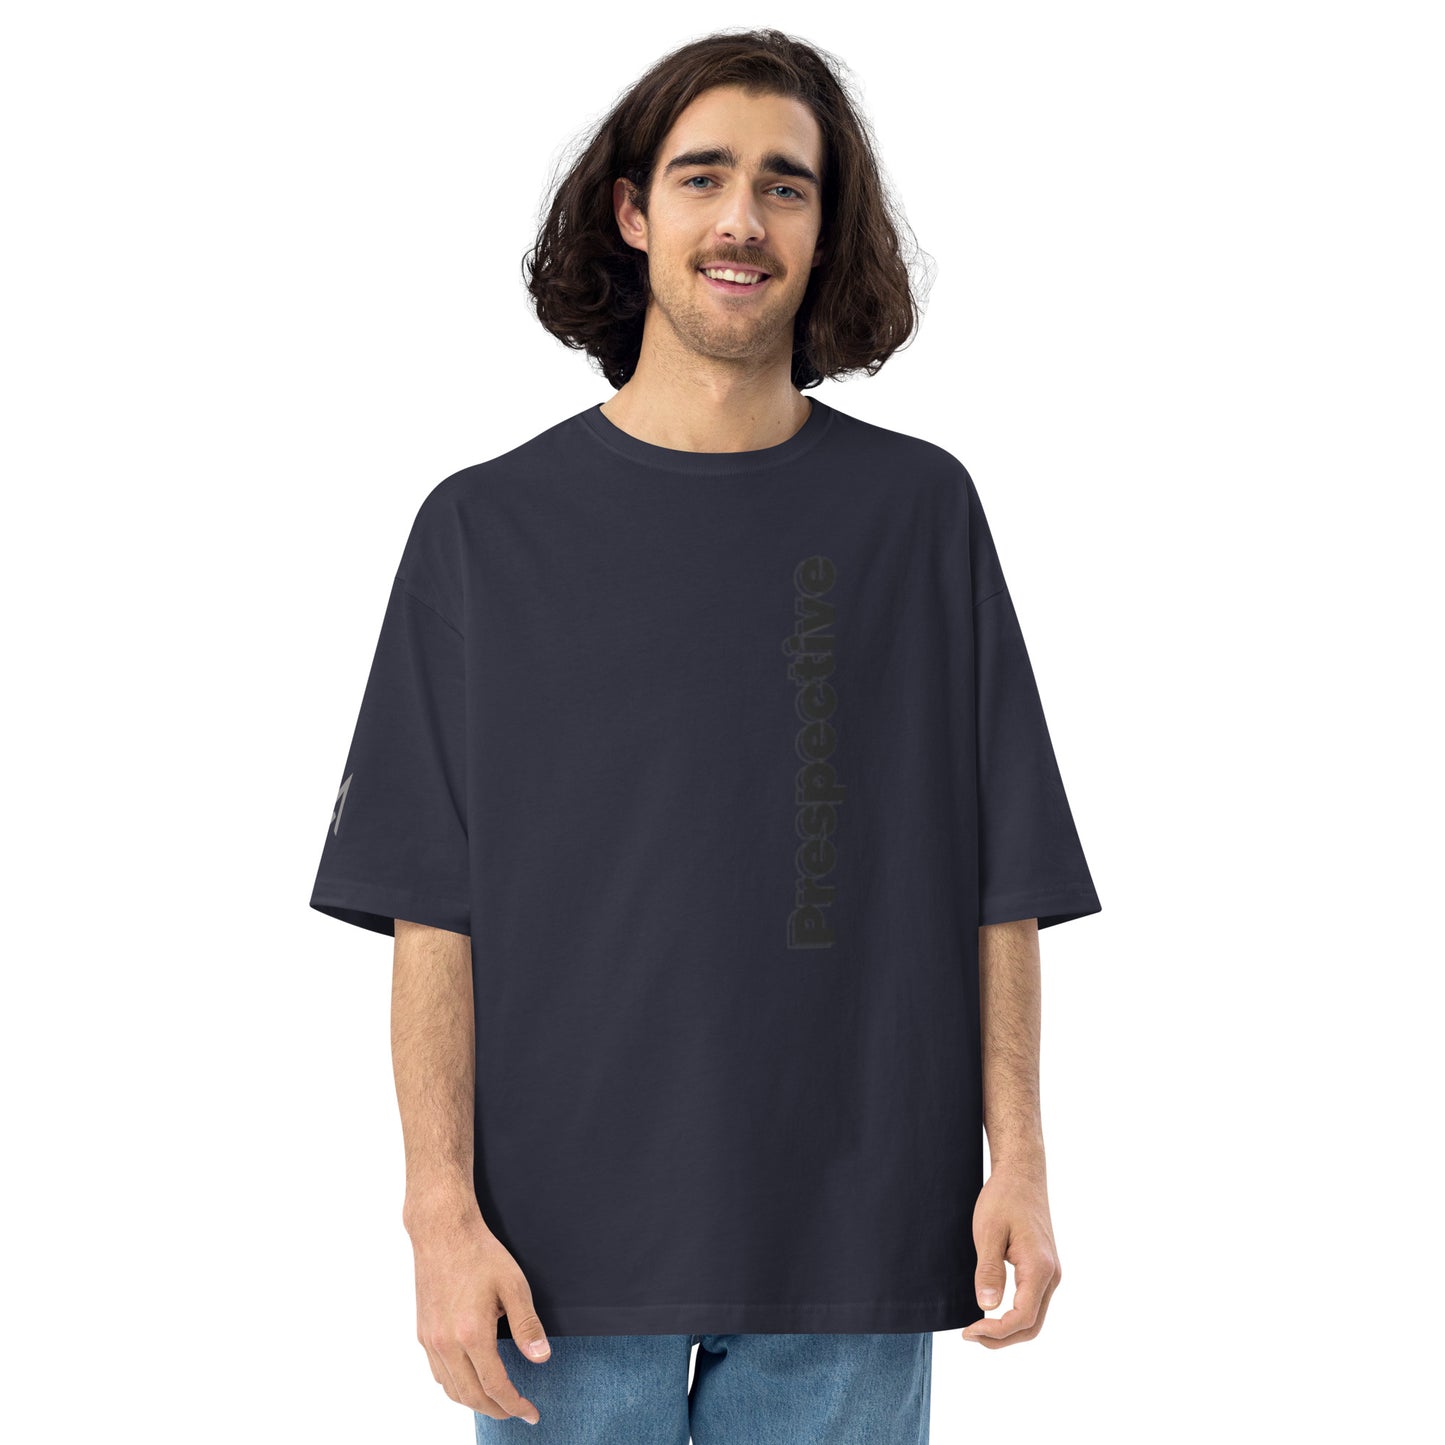 BlackMars oversized t-shirt